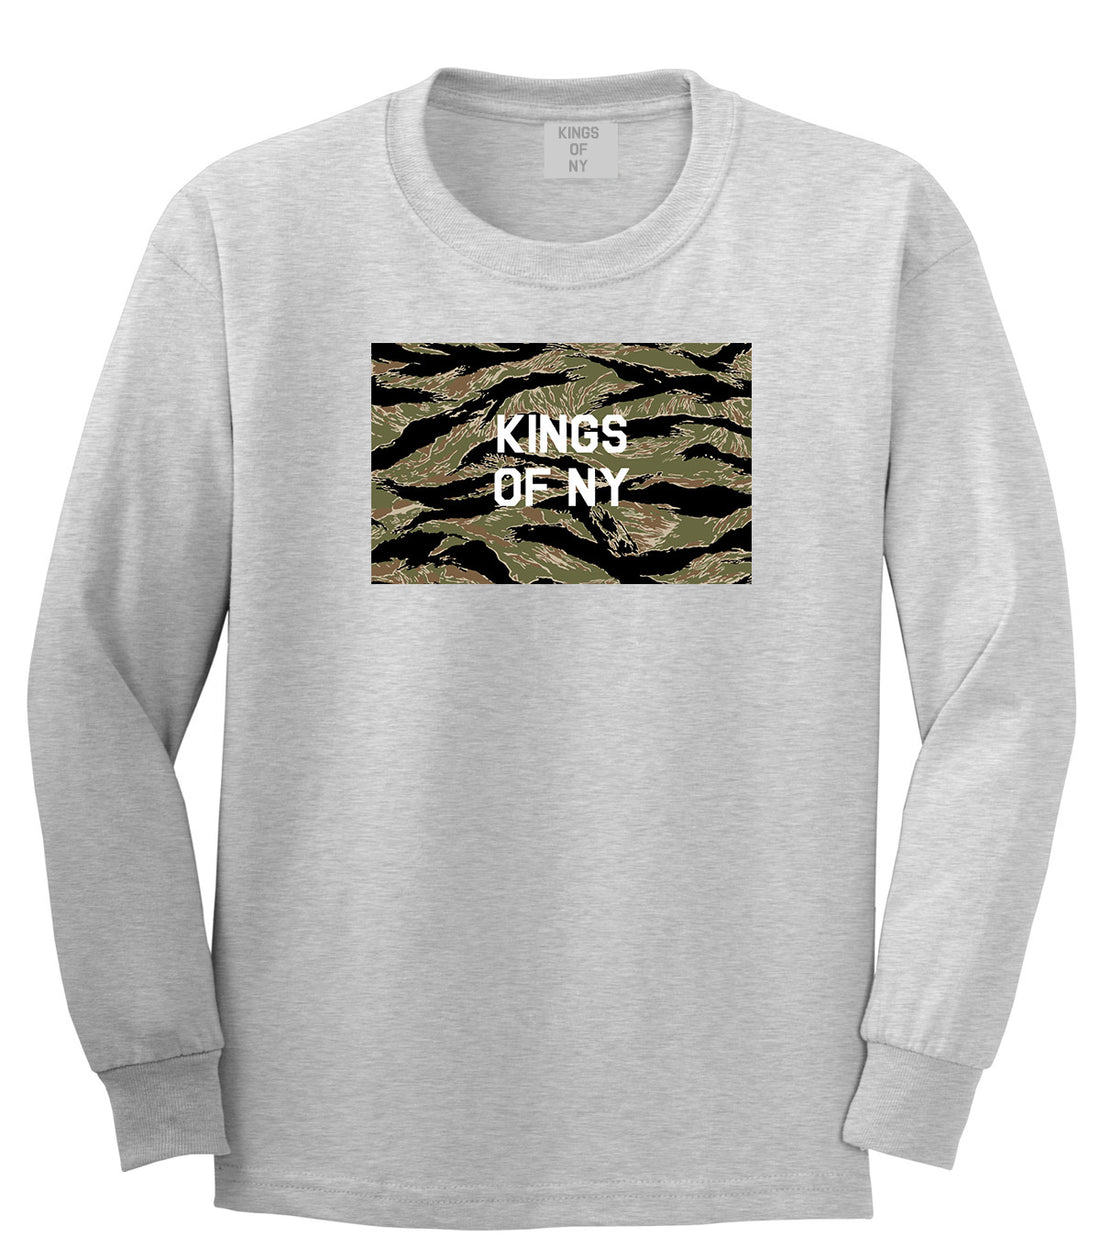 Tiger Stripe Camo Army Long Sleeve T-Shirt in Grey